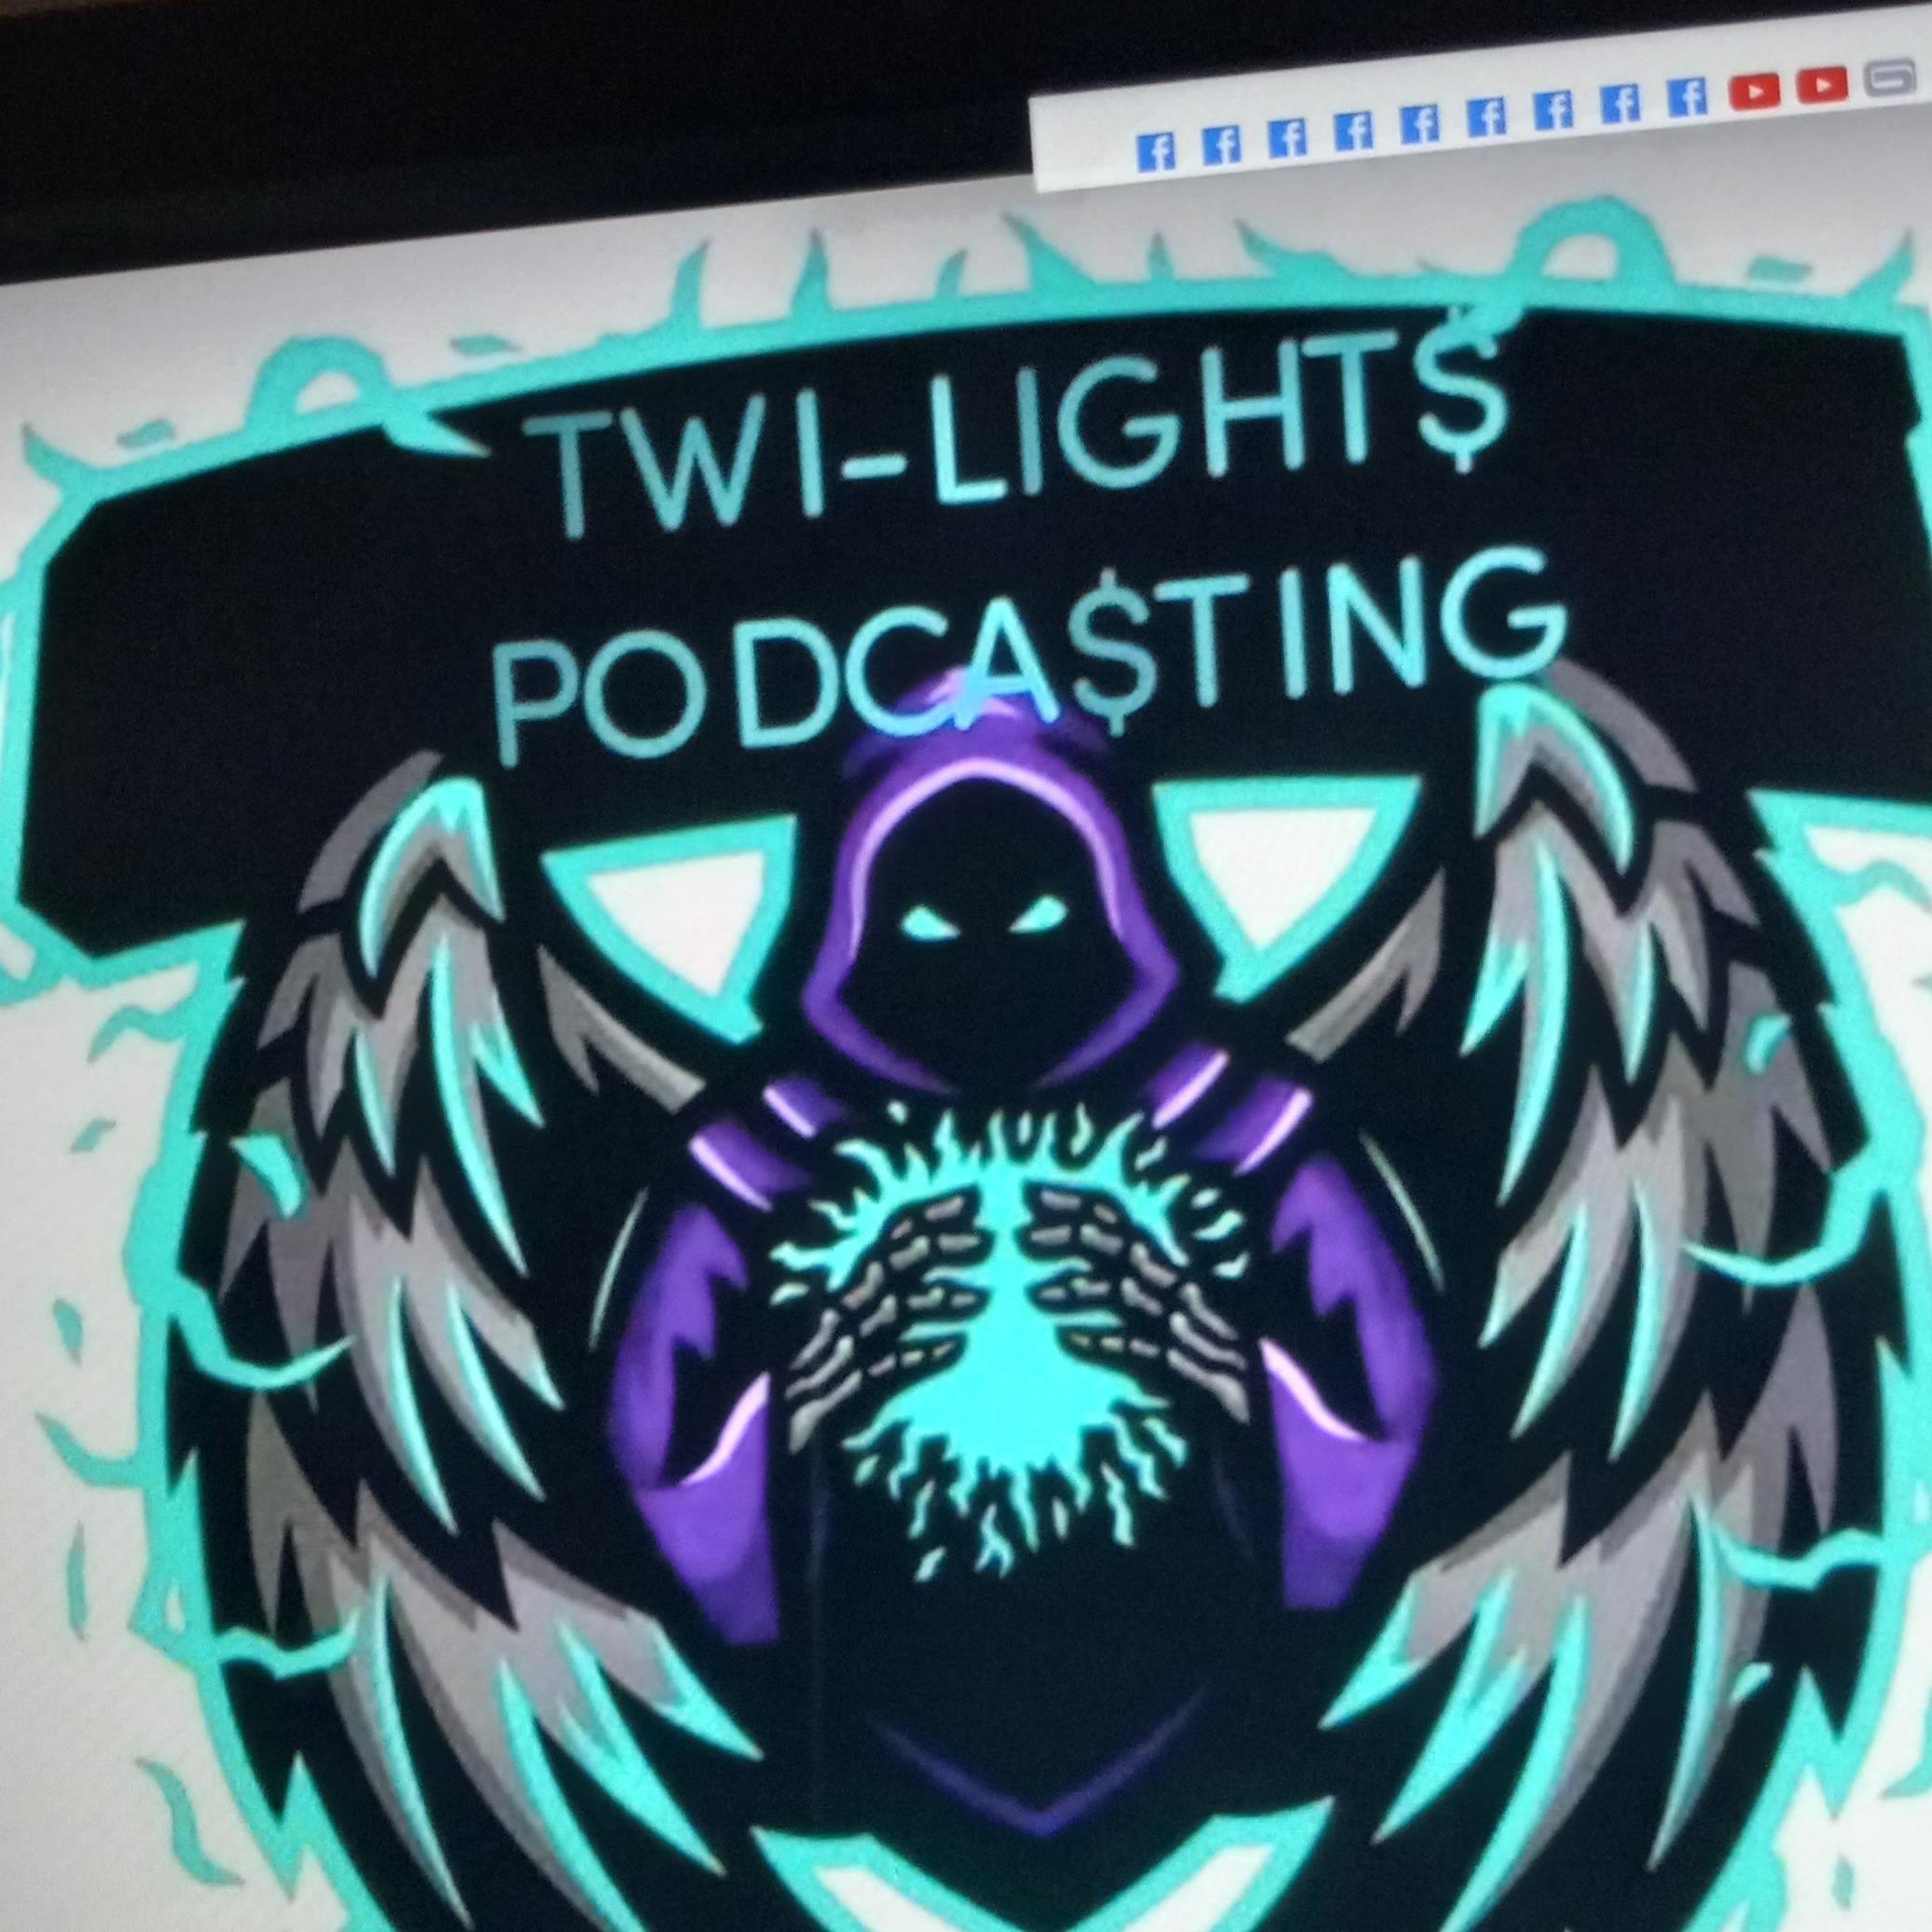 Twi-lights Podcasting